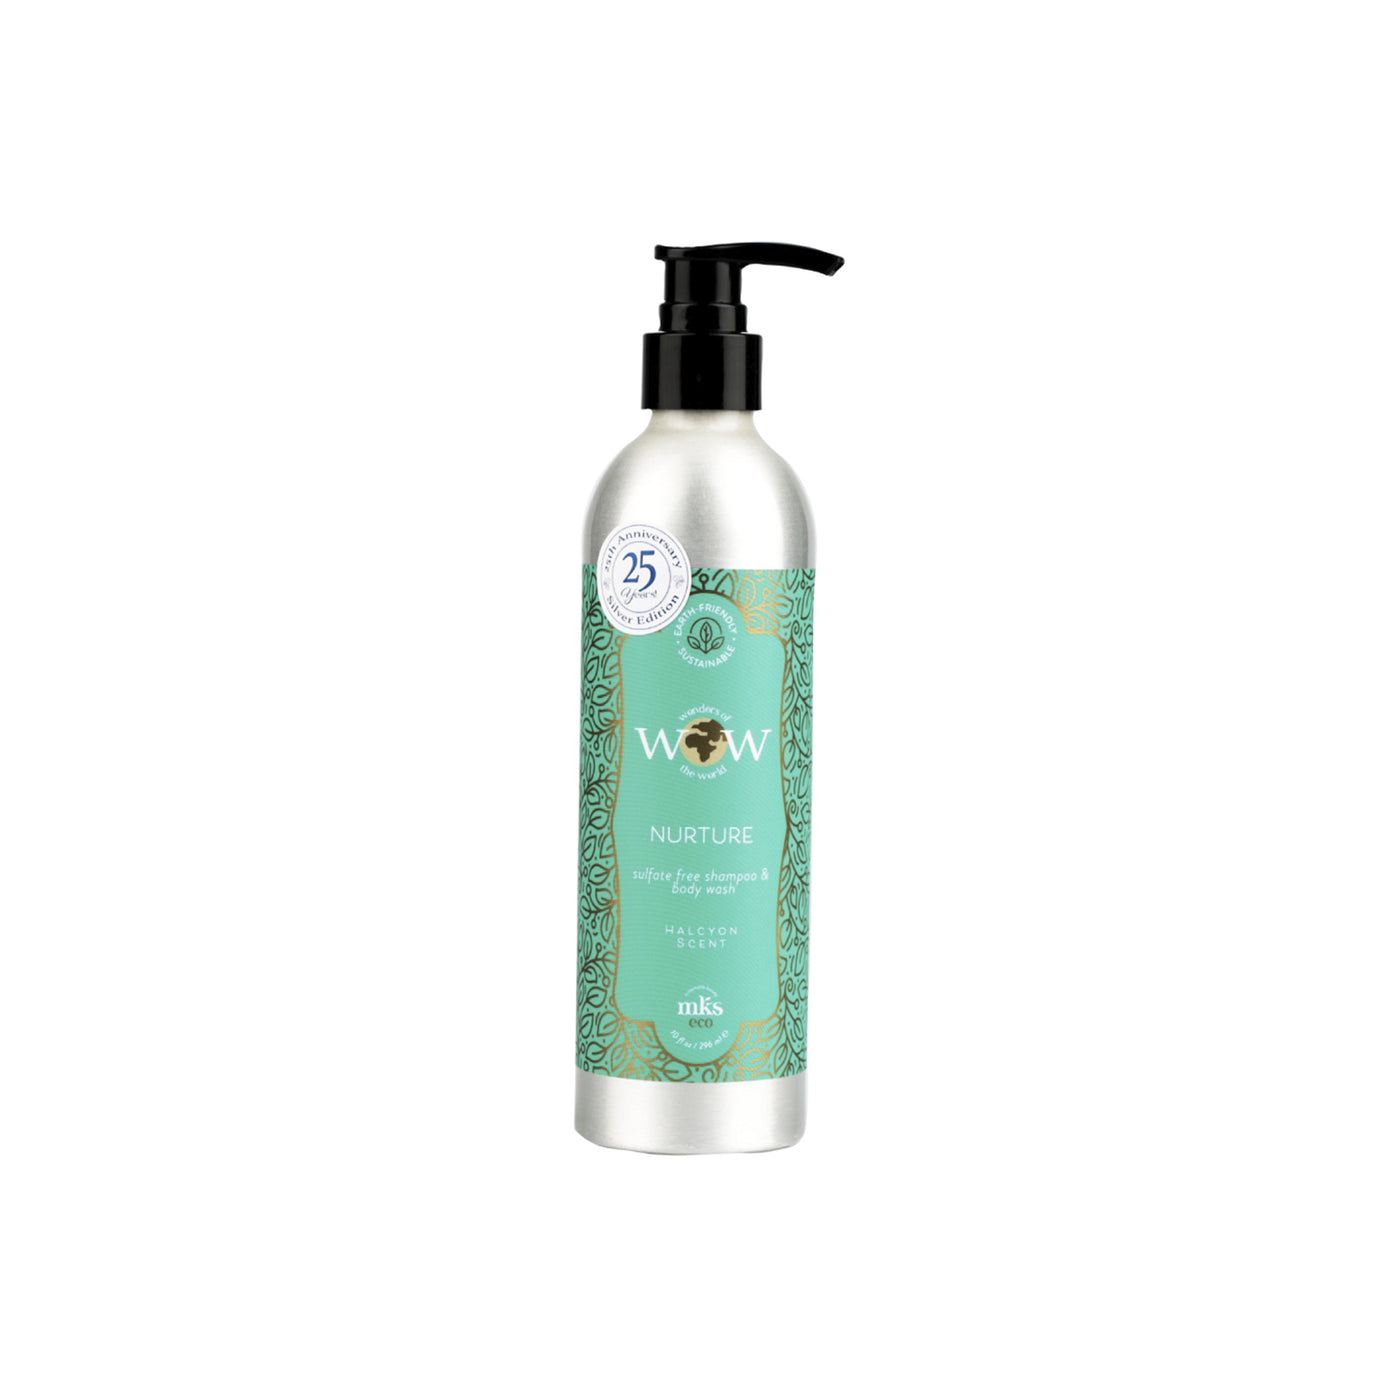 MKS eco WOW - 'Nurture' Sulfate-Free Shampoo & Body Wash in Halcyon Scent